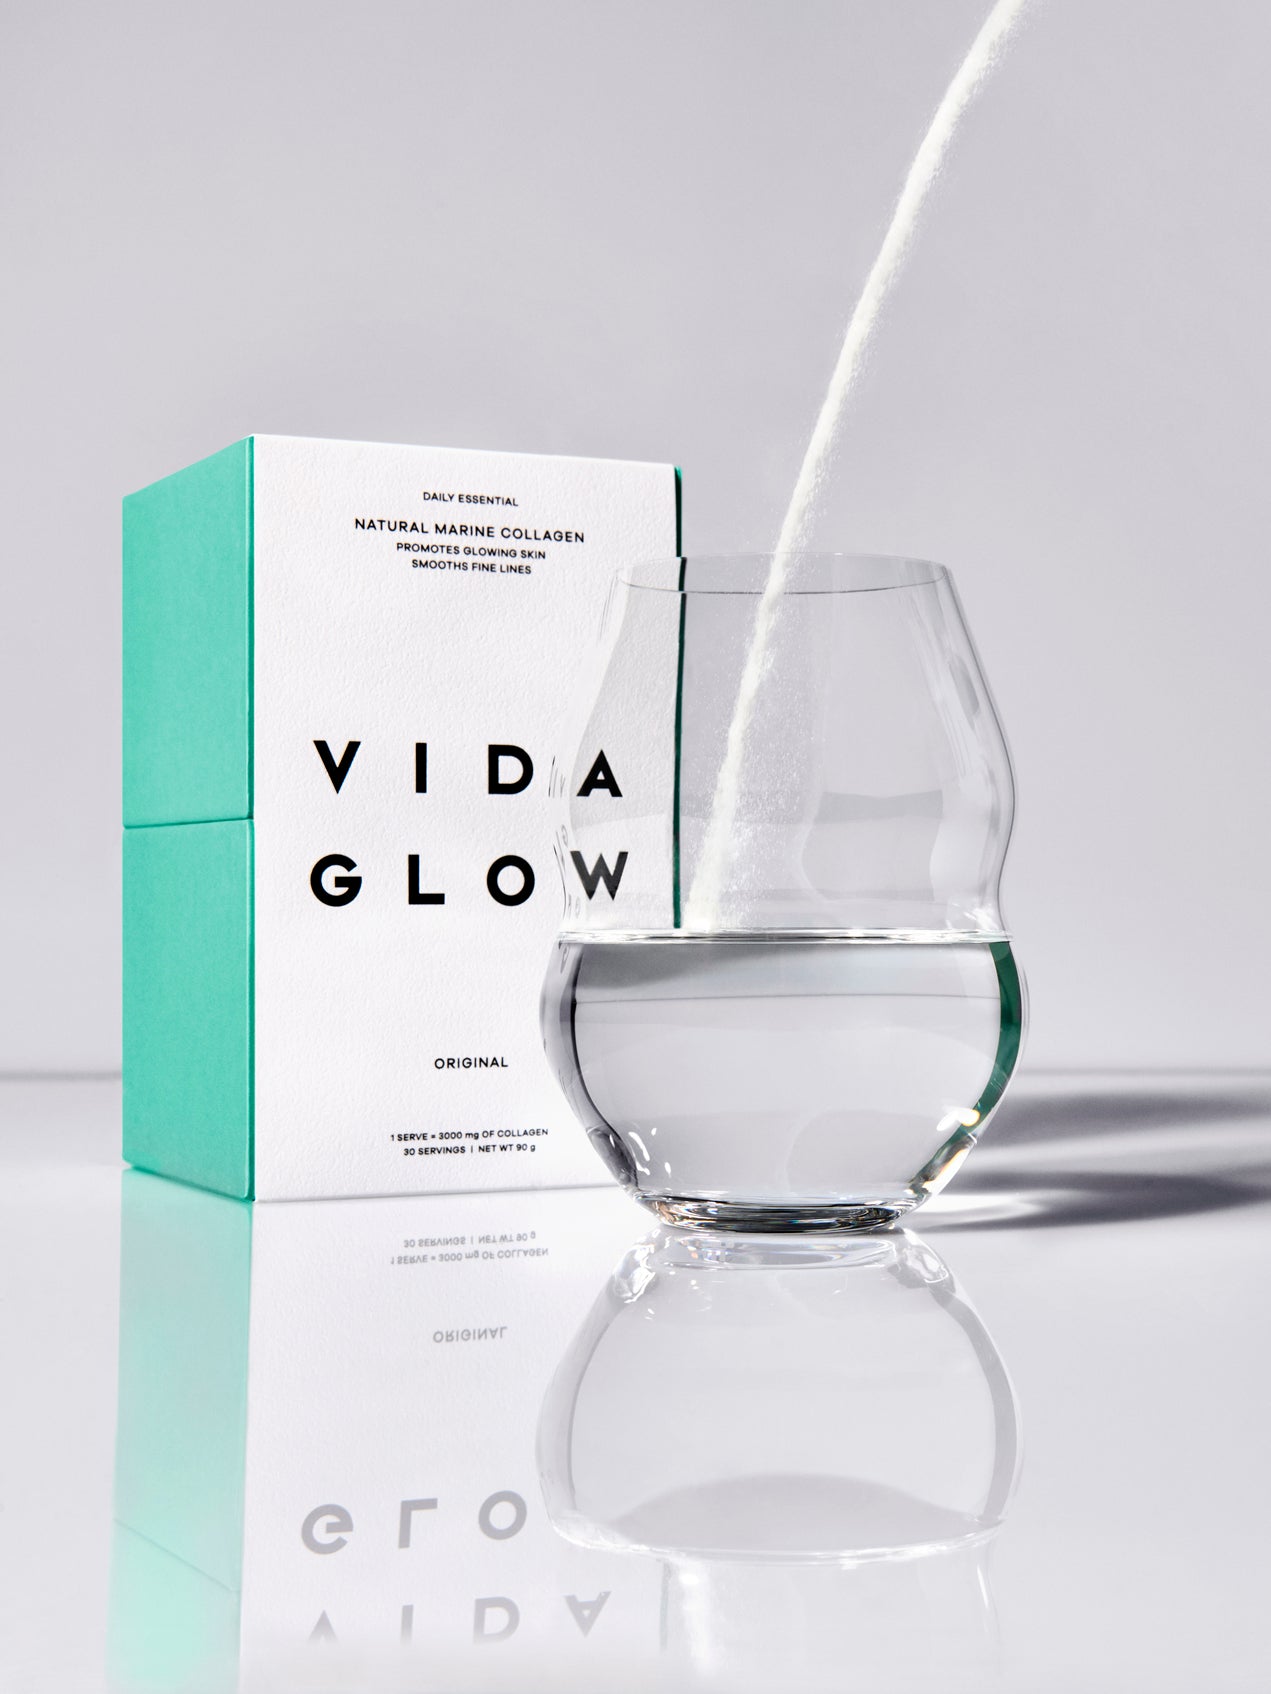 Introducing Vida Glow’s science-backed ingestible beauty